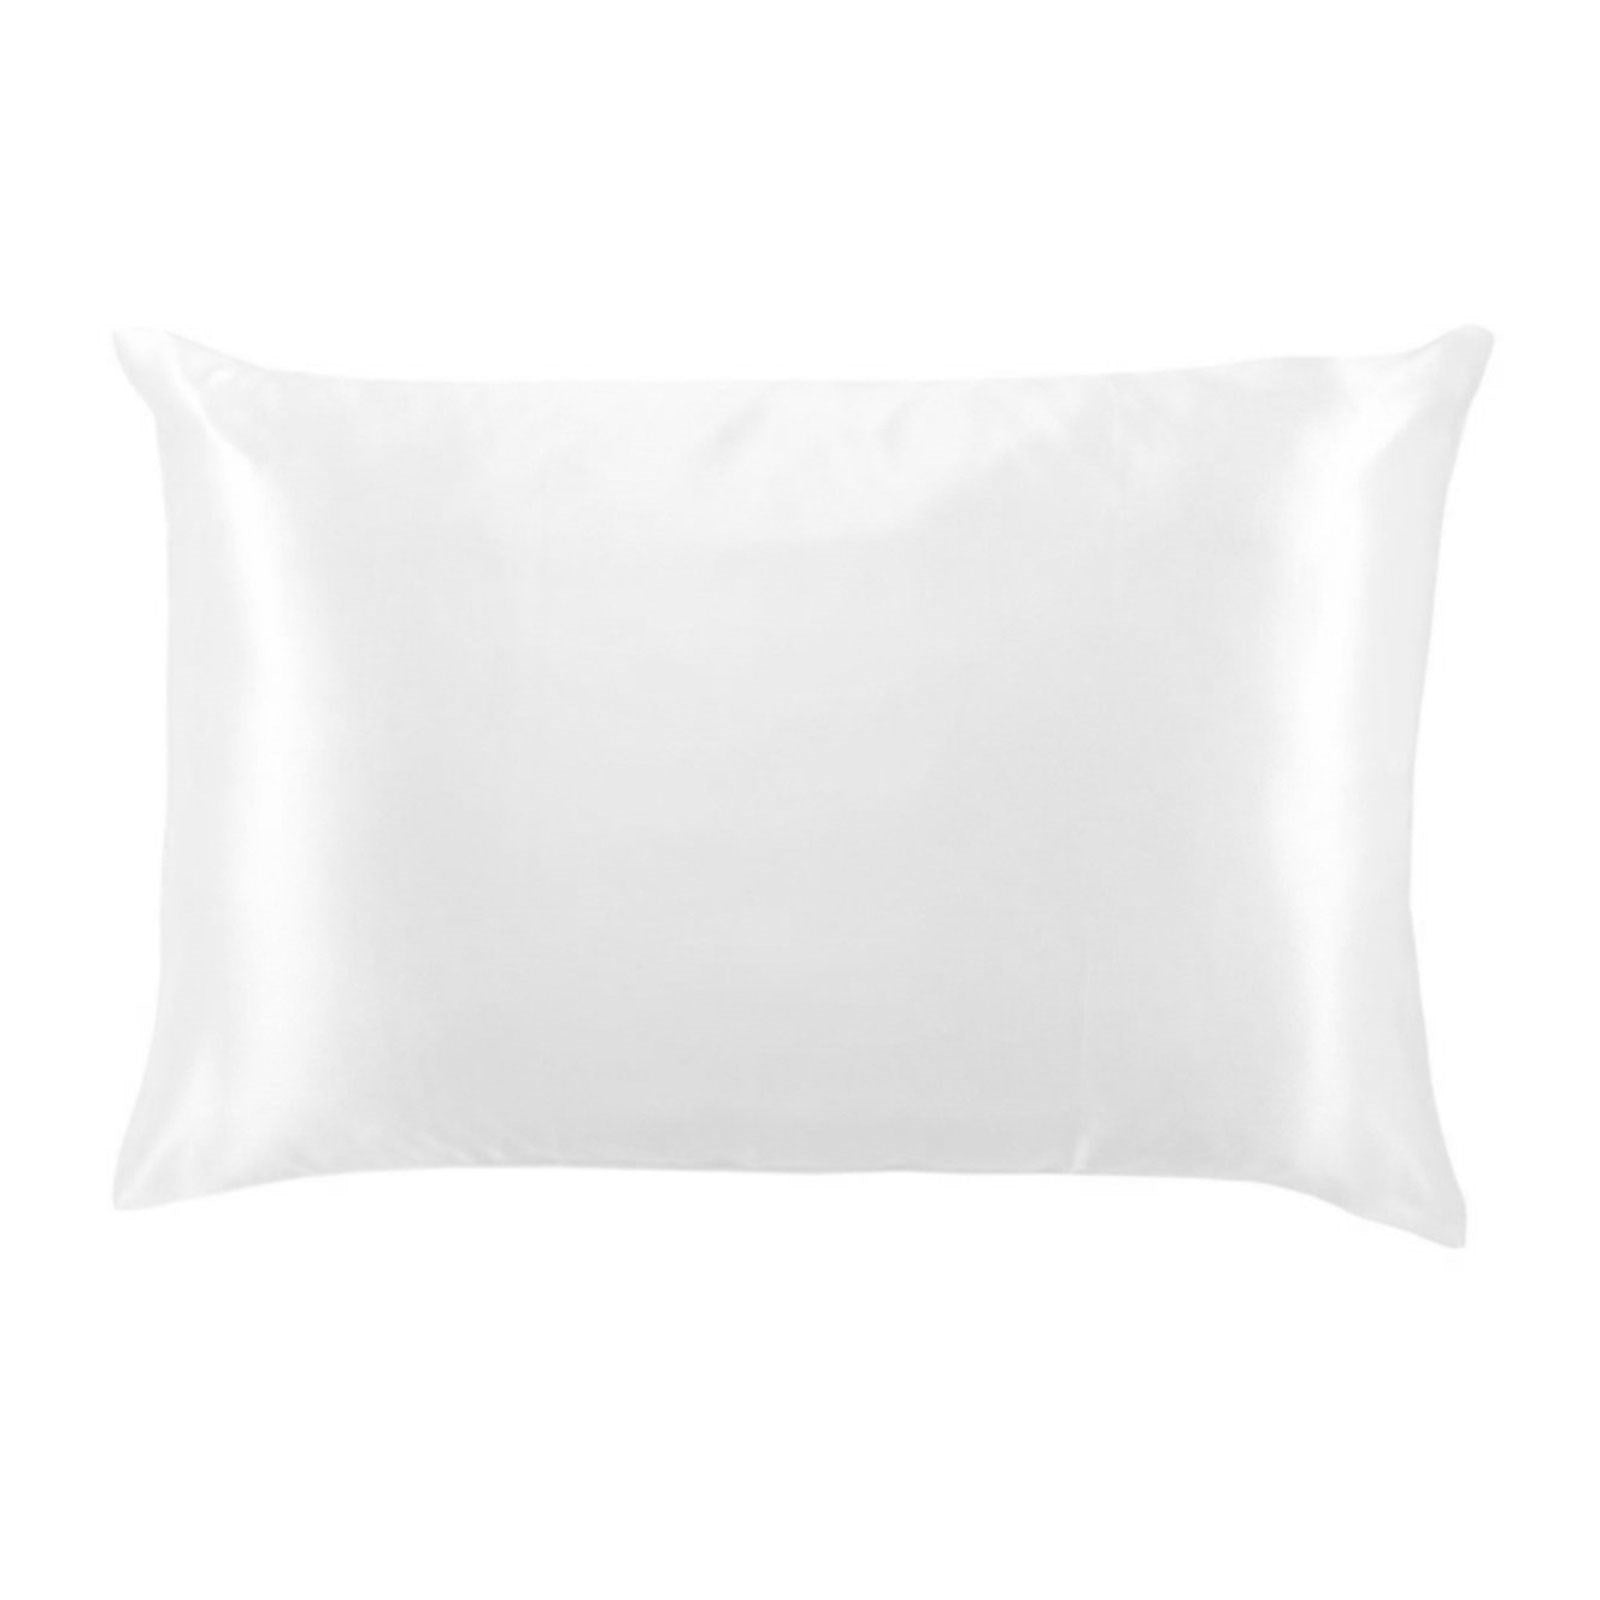 light gray pillow case